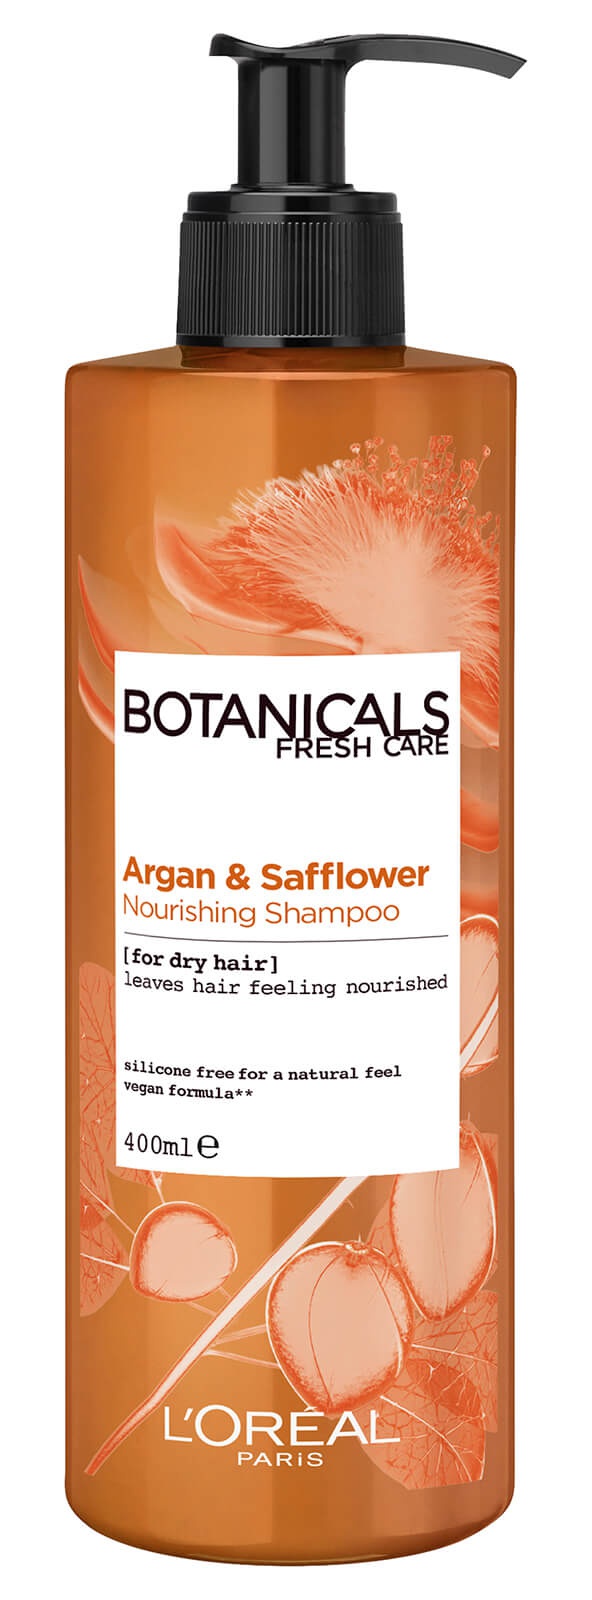 L'Oreal Paris Botanicals Safflower Dry Hair Shampoo